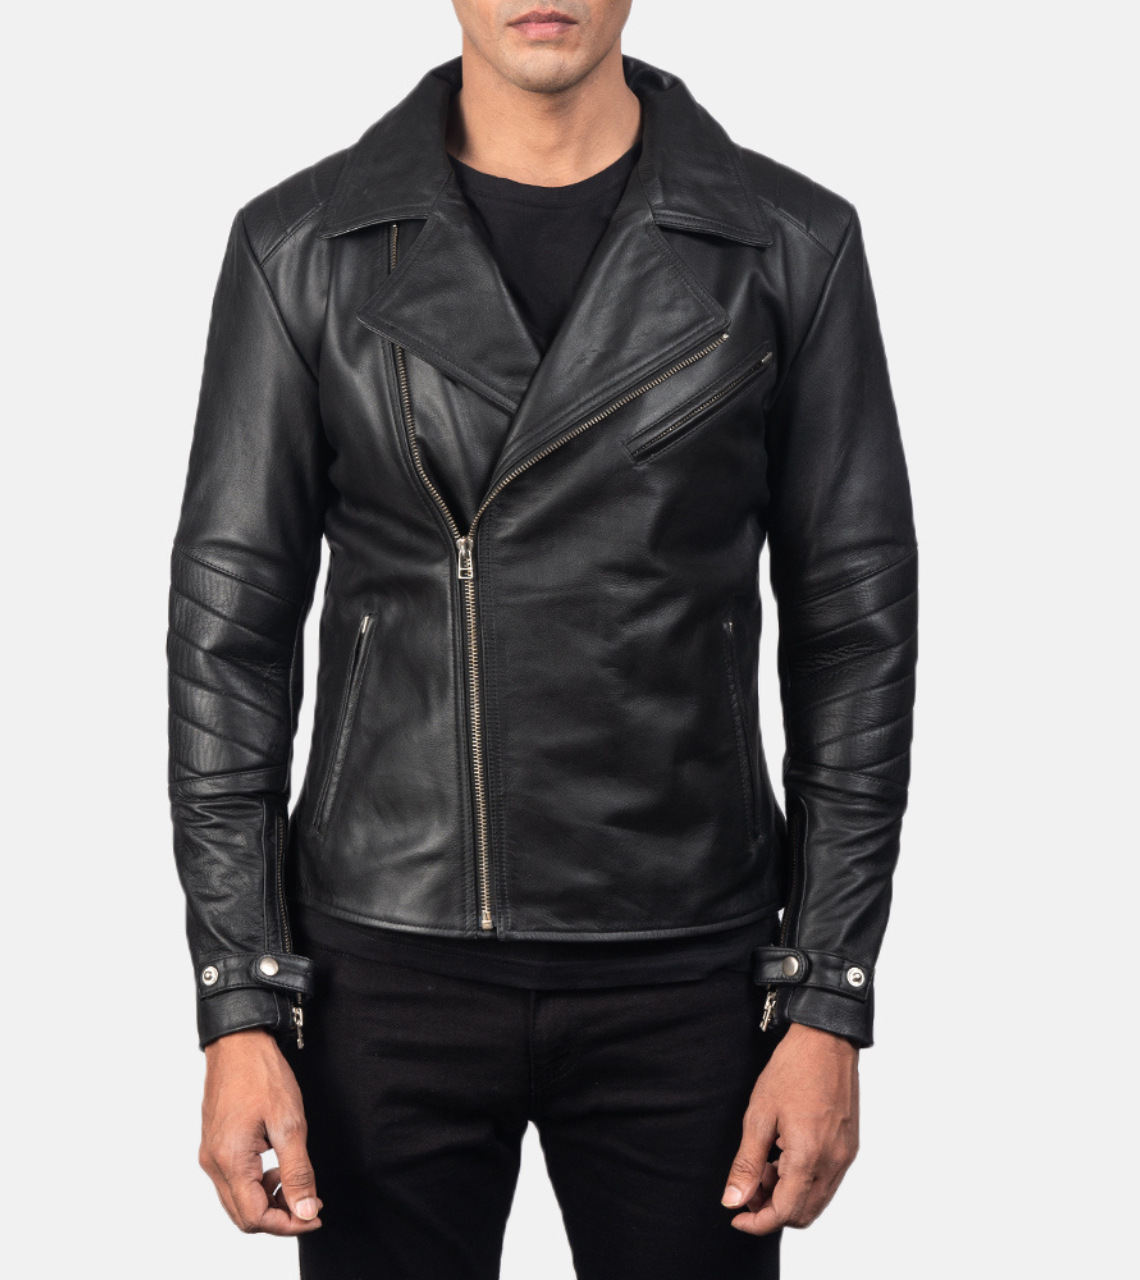 Bollons Leather Biker Jacket 